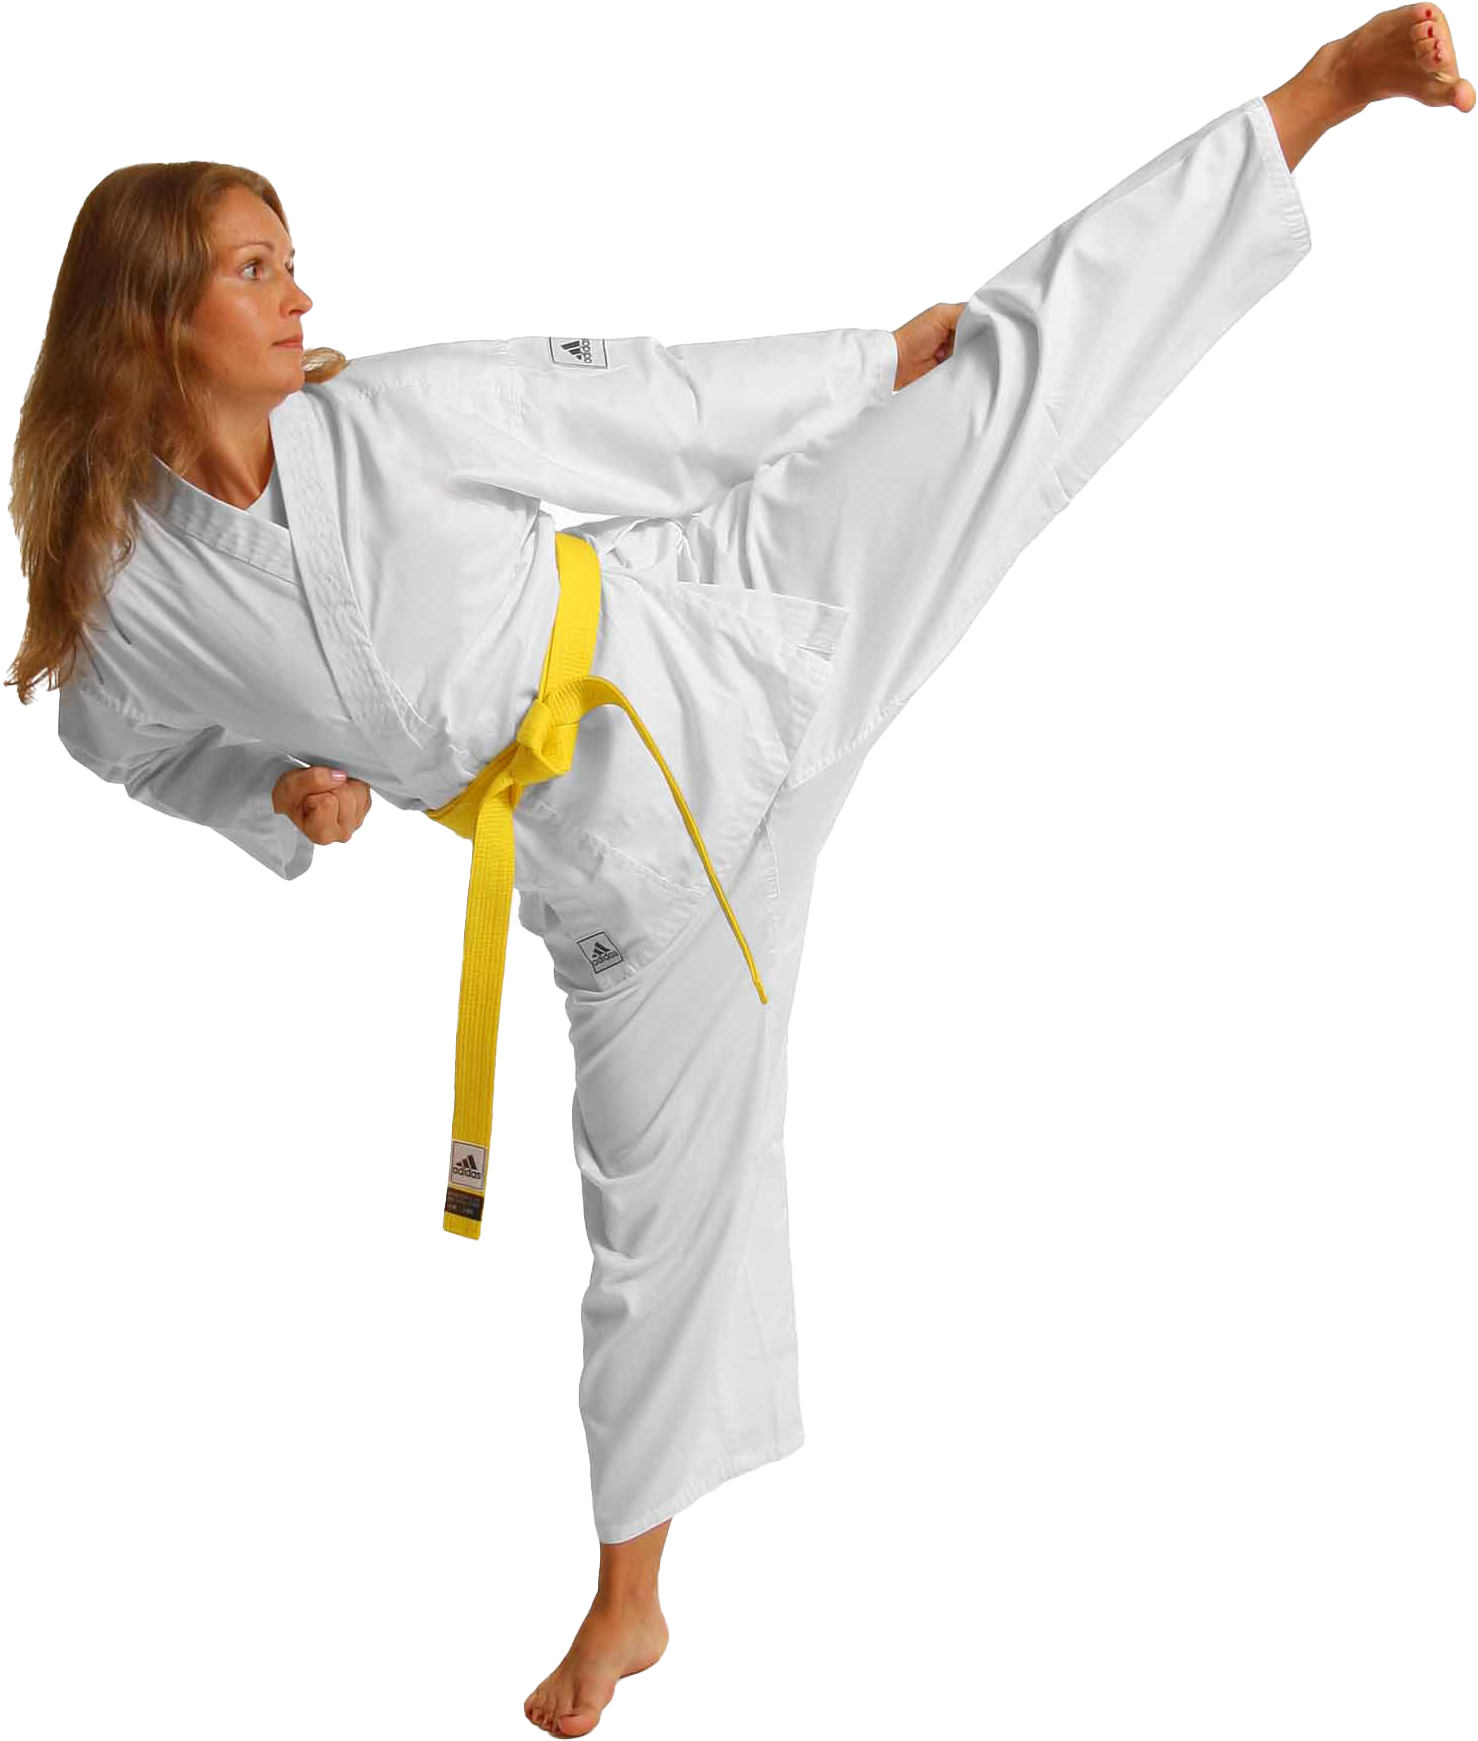 A Woman In A Karate Uniform